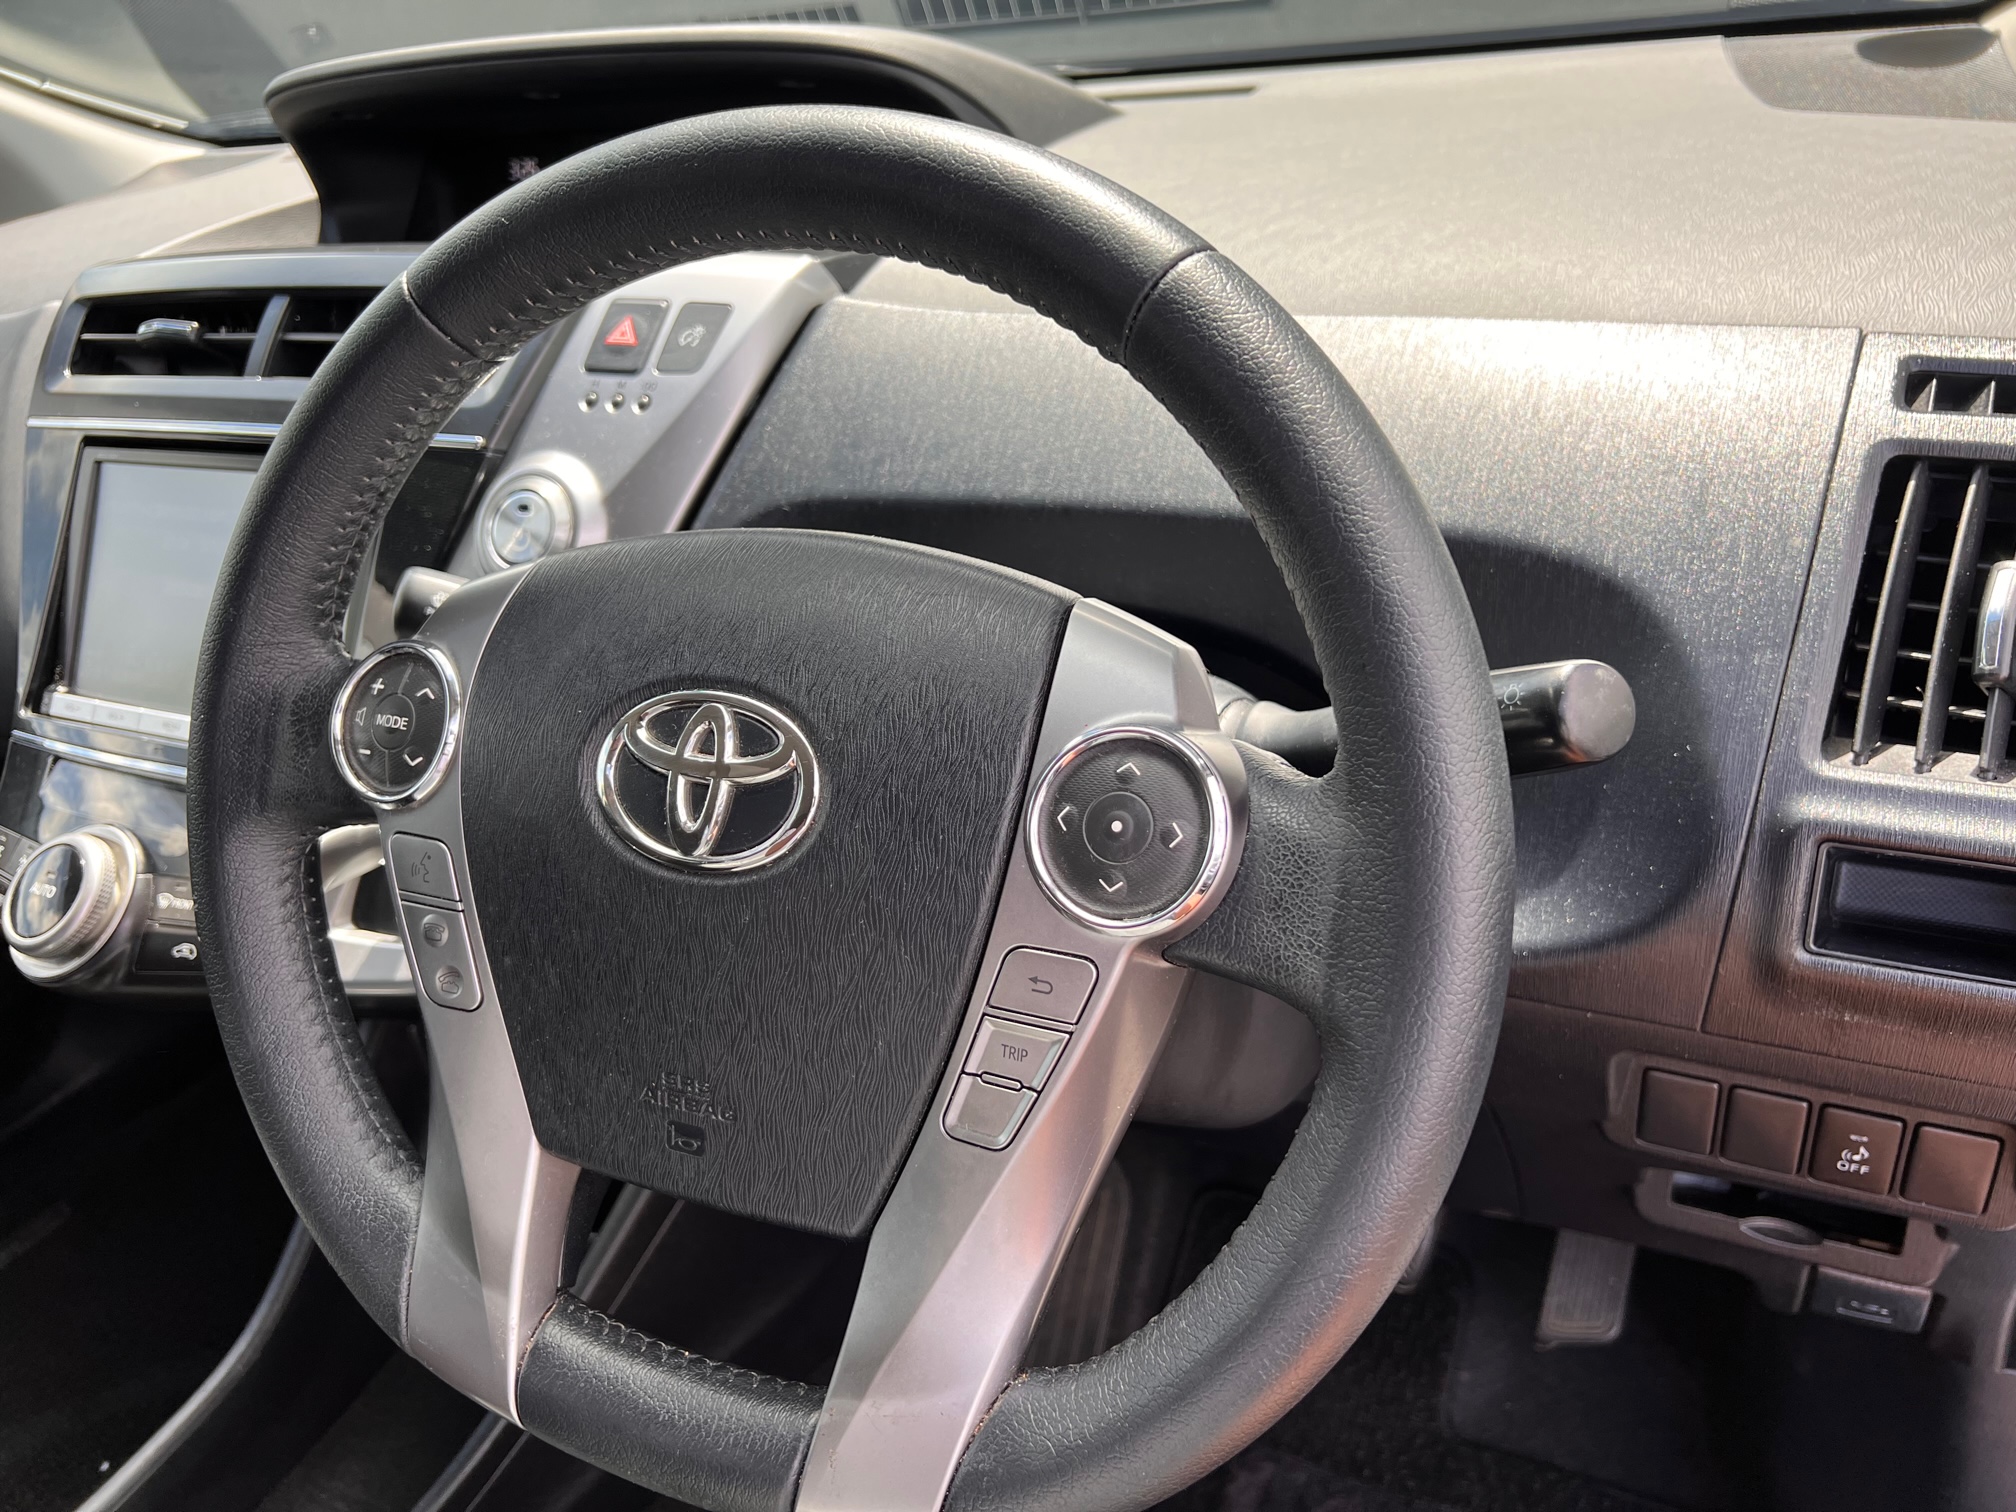 Toyota Alpha Prius 2016 Image 17